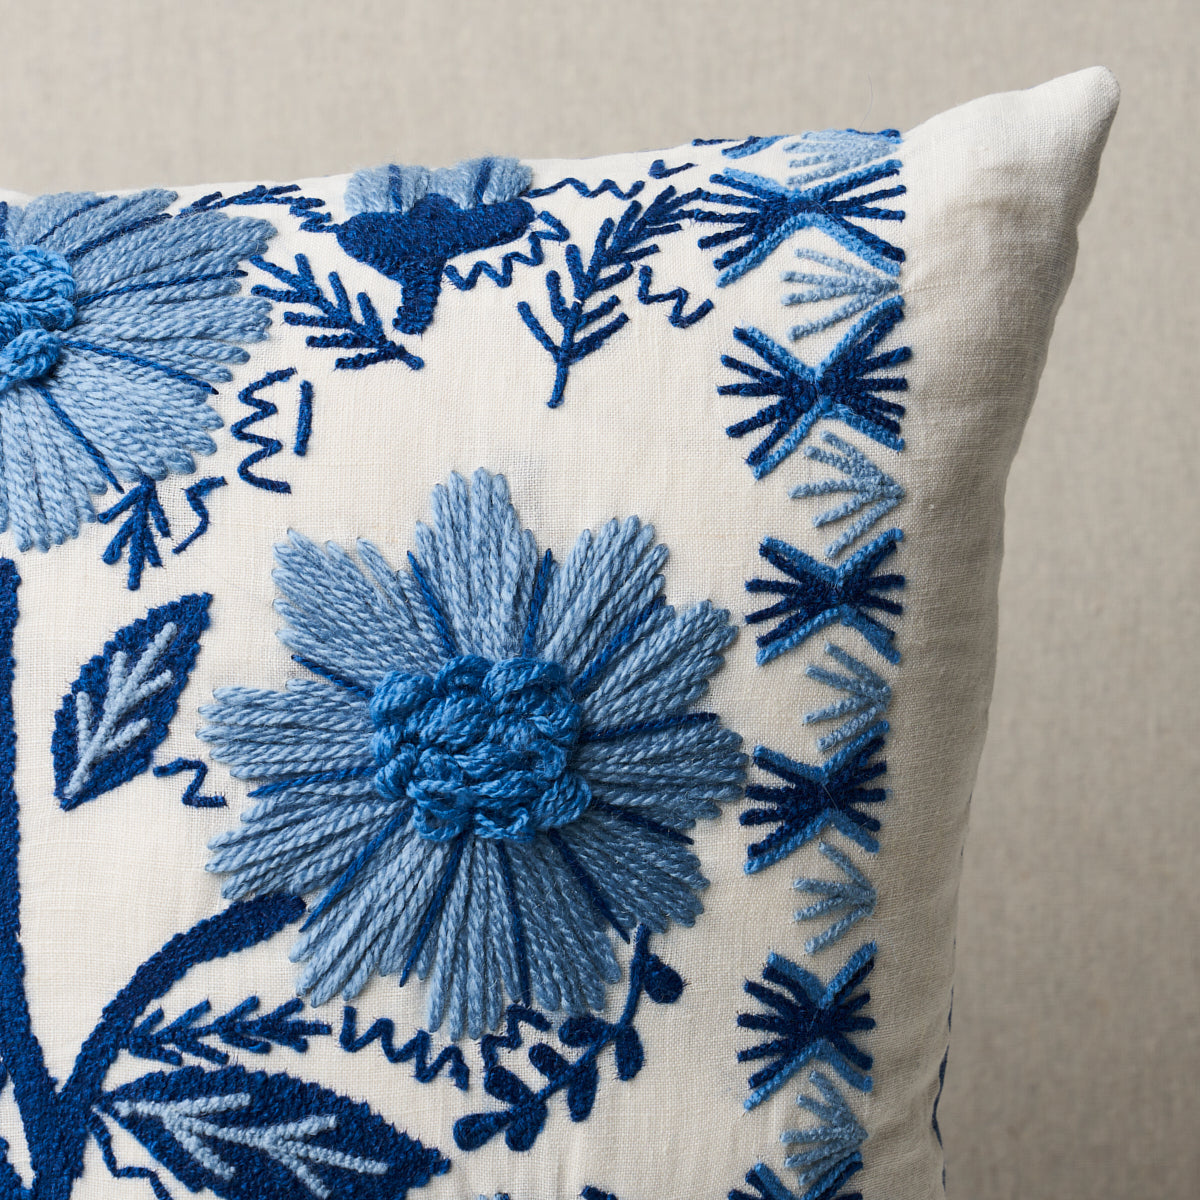 Purchase So7233005 | Marguerite Embroidery Pillow, Sky - Schumacher Pillows